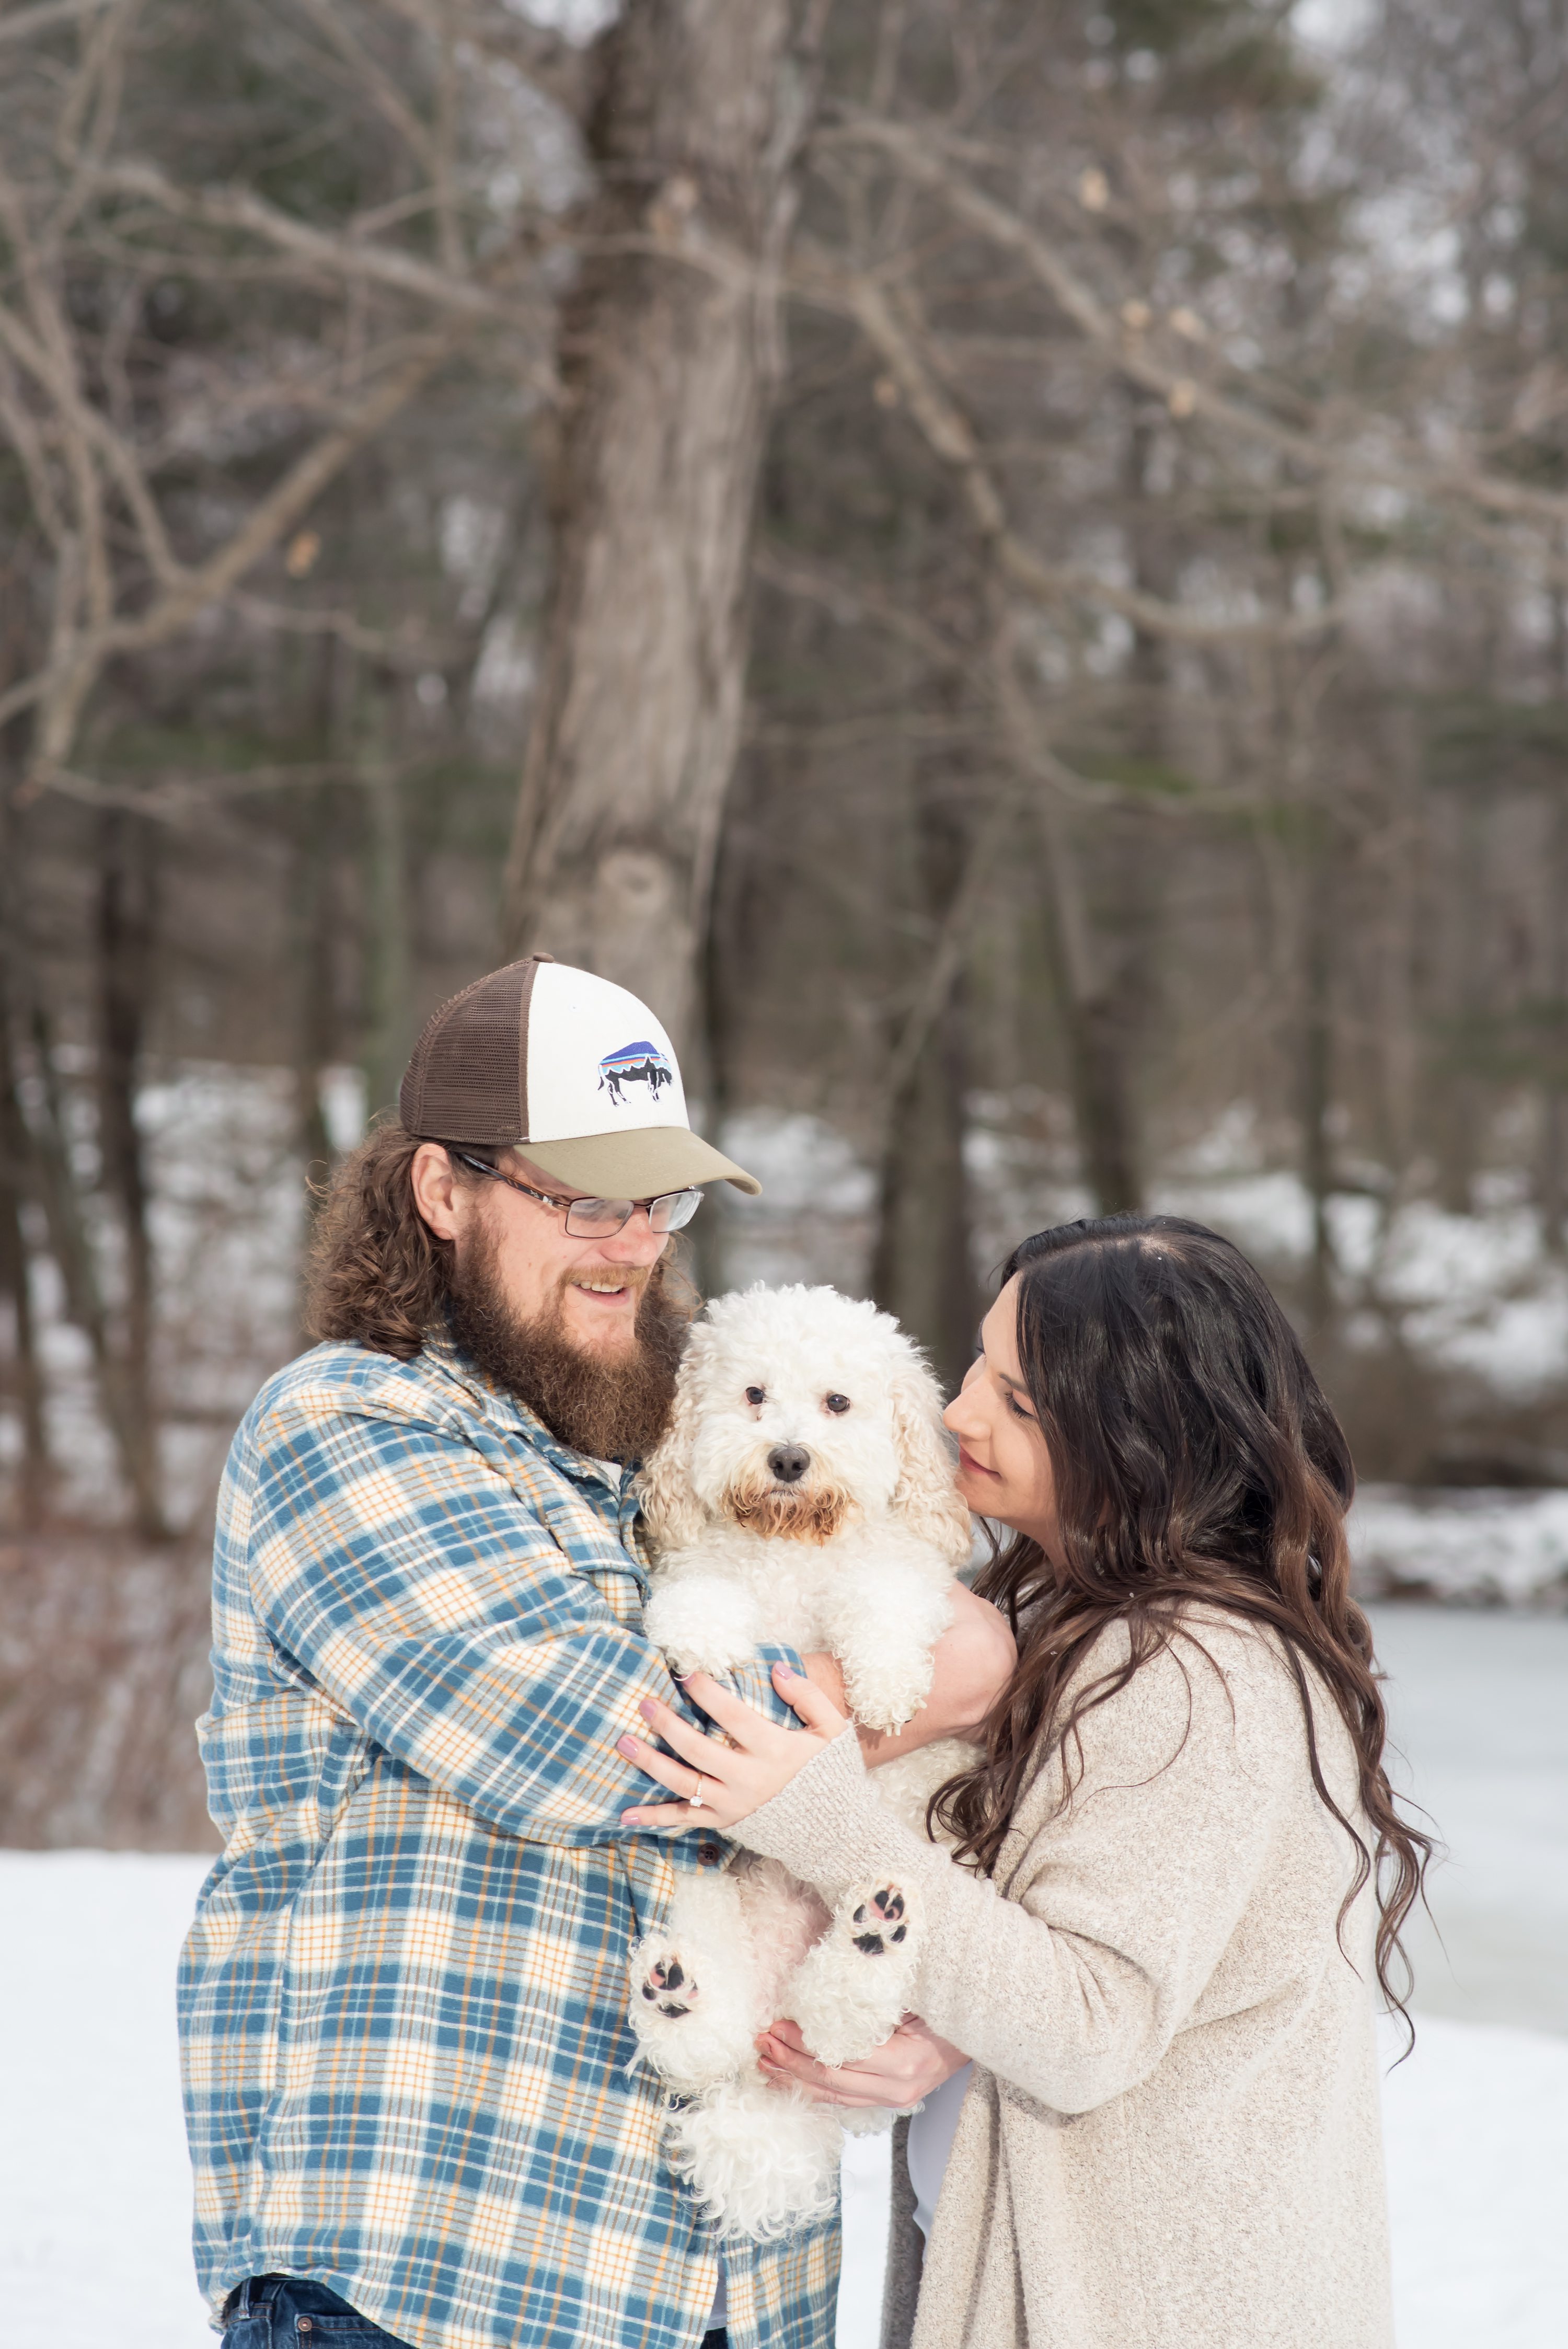 Rhode Island Wedding Photographer,Norton Photographer,Engagement Session with dog,Incorporating Dogs at Engagement Session,Massachusetts Engagement Photographer